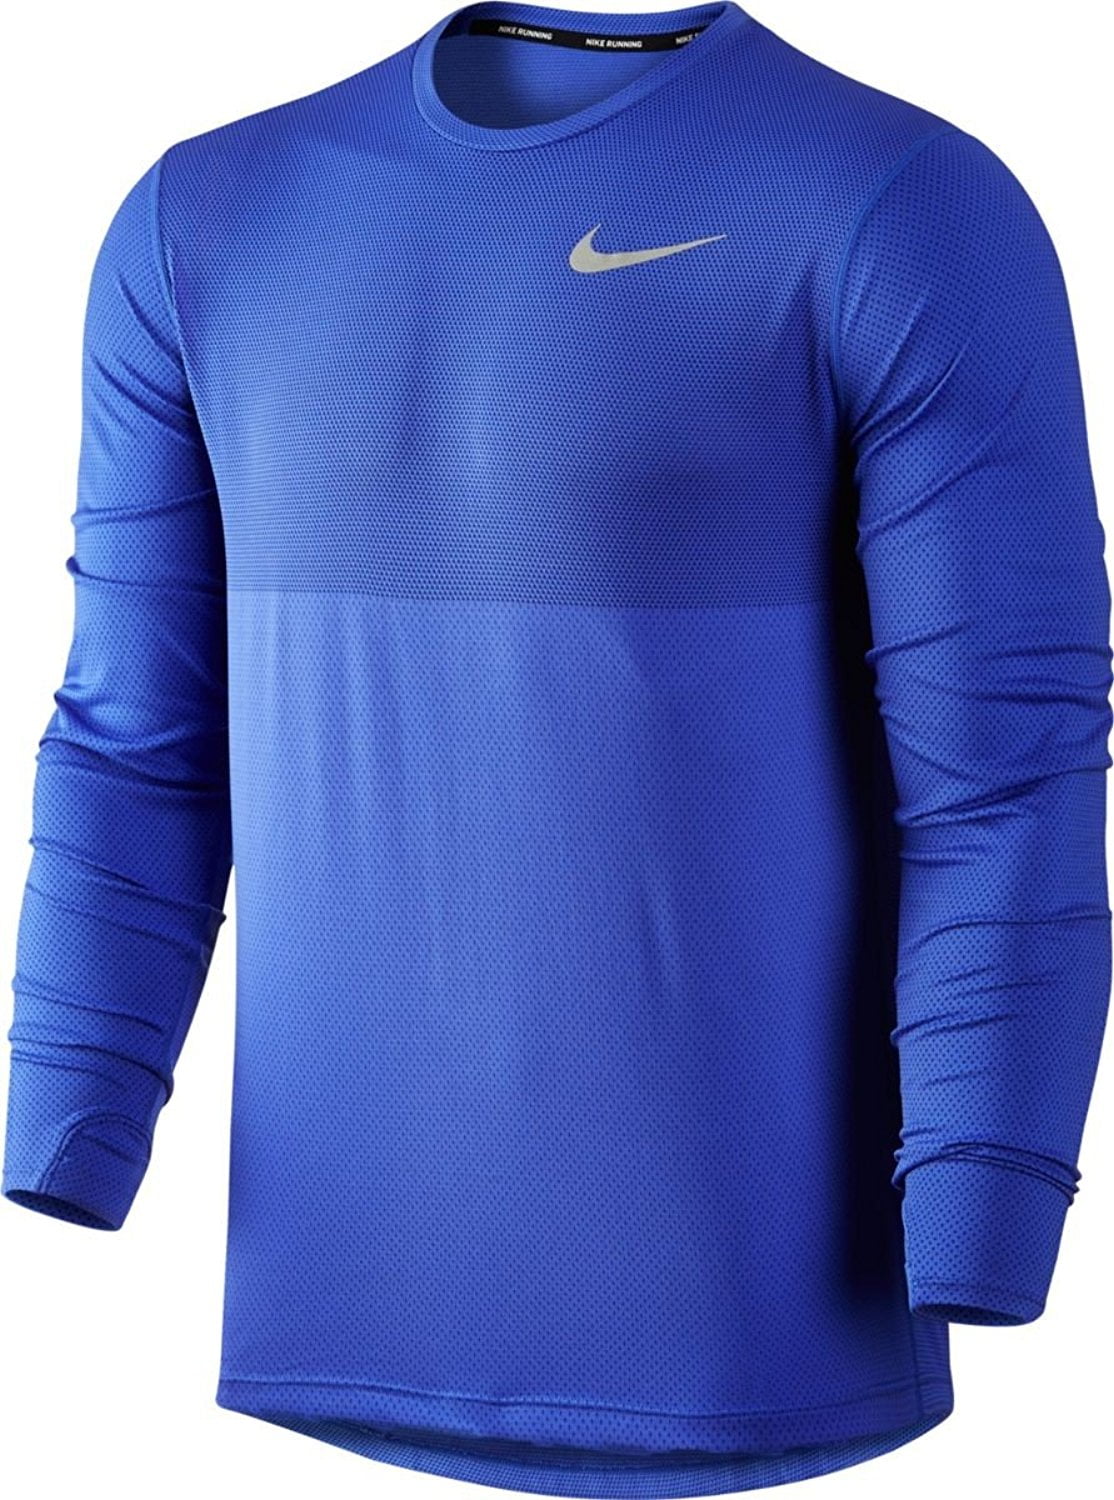 Nike Men's Zonal Cooling Relay Long Sleeve Running Shirt-Blue